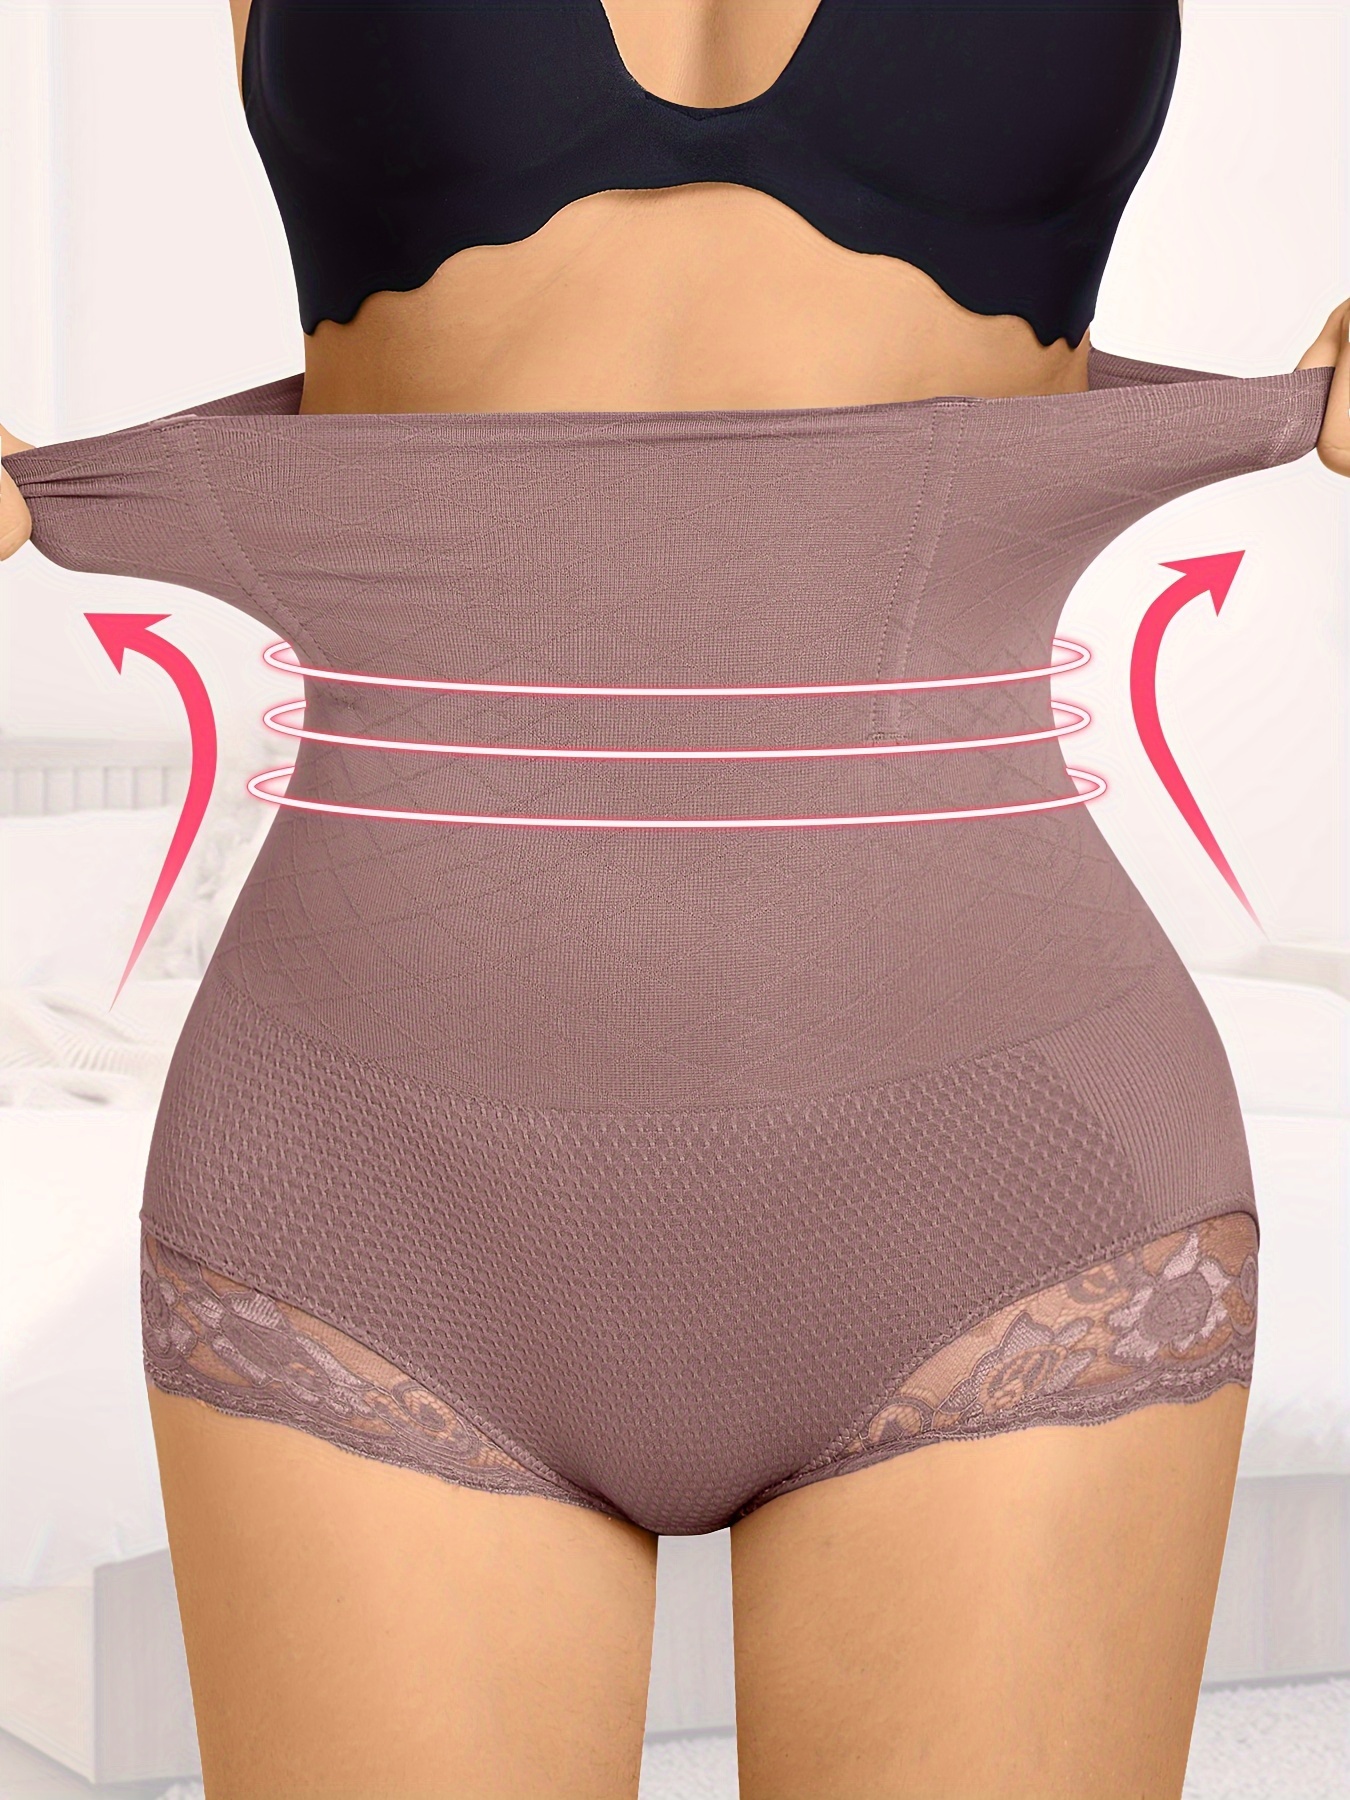 Buy Gotoly Invisable Body Shaper High Waist Tummy Control Panty